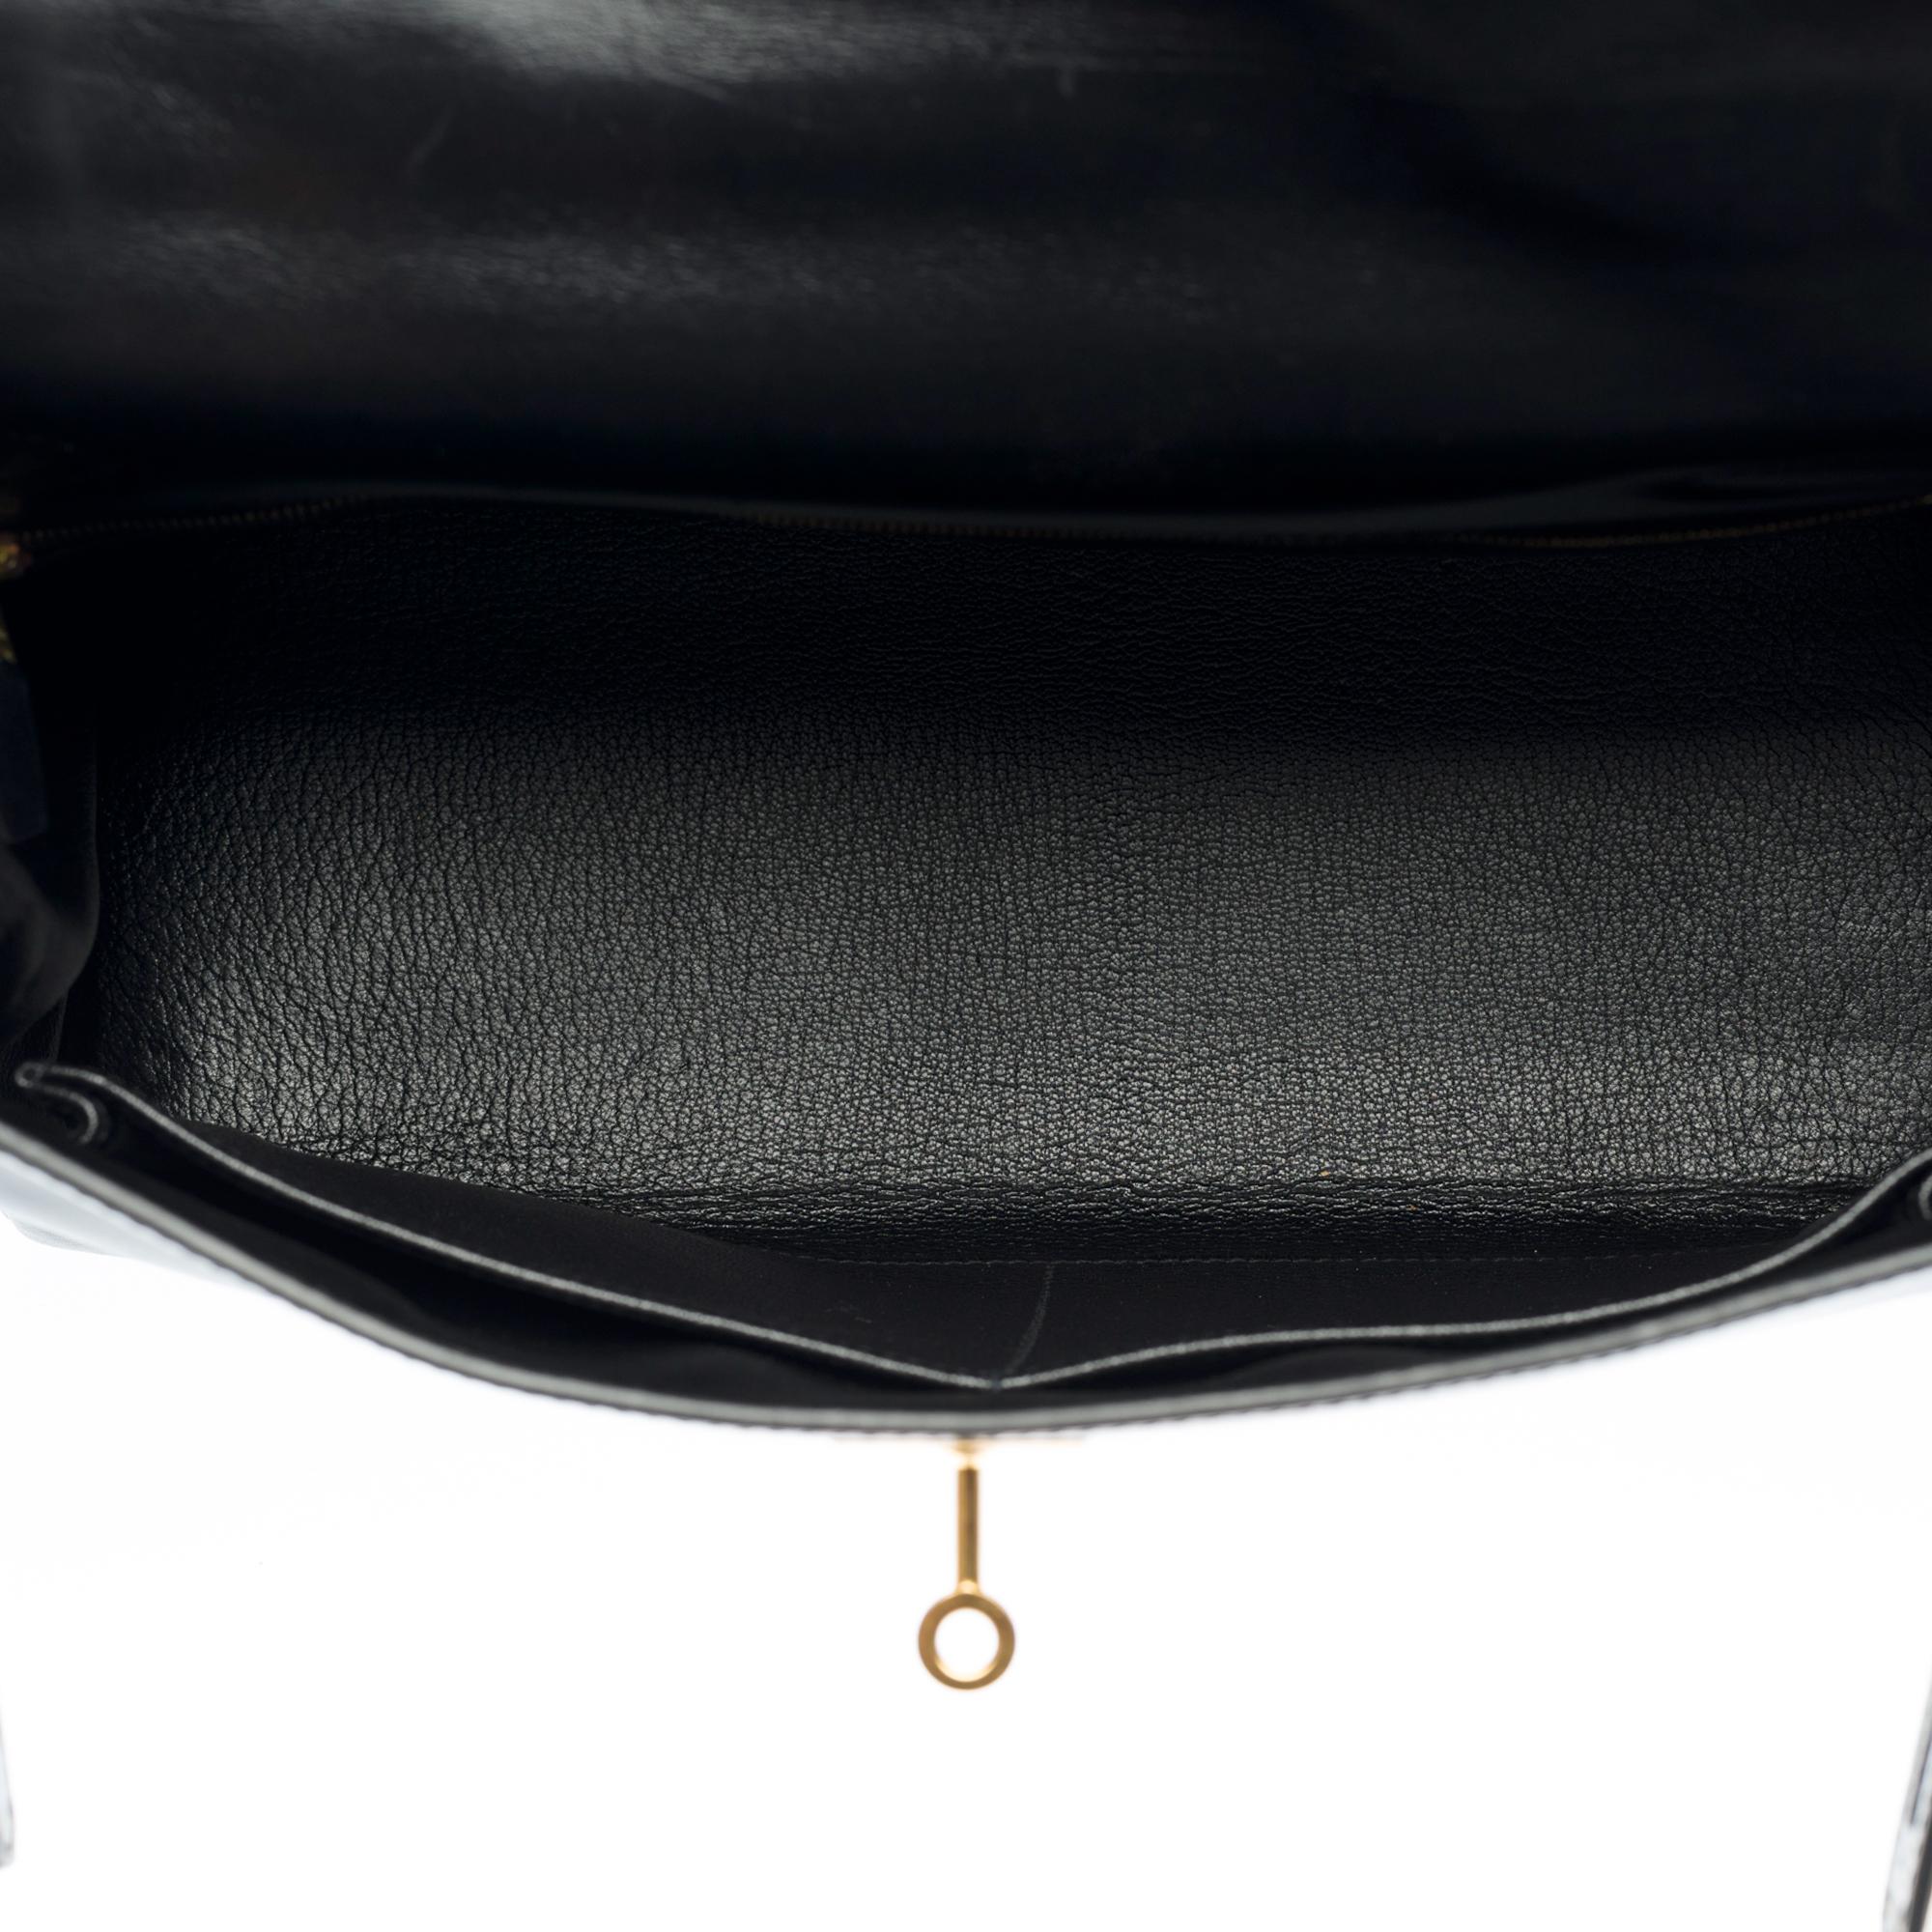 Rare Hermès Kelly 32 retourne handbag strap in black box calfskin leather, GHW 1